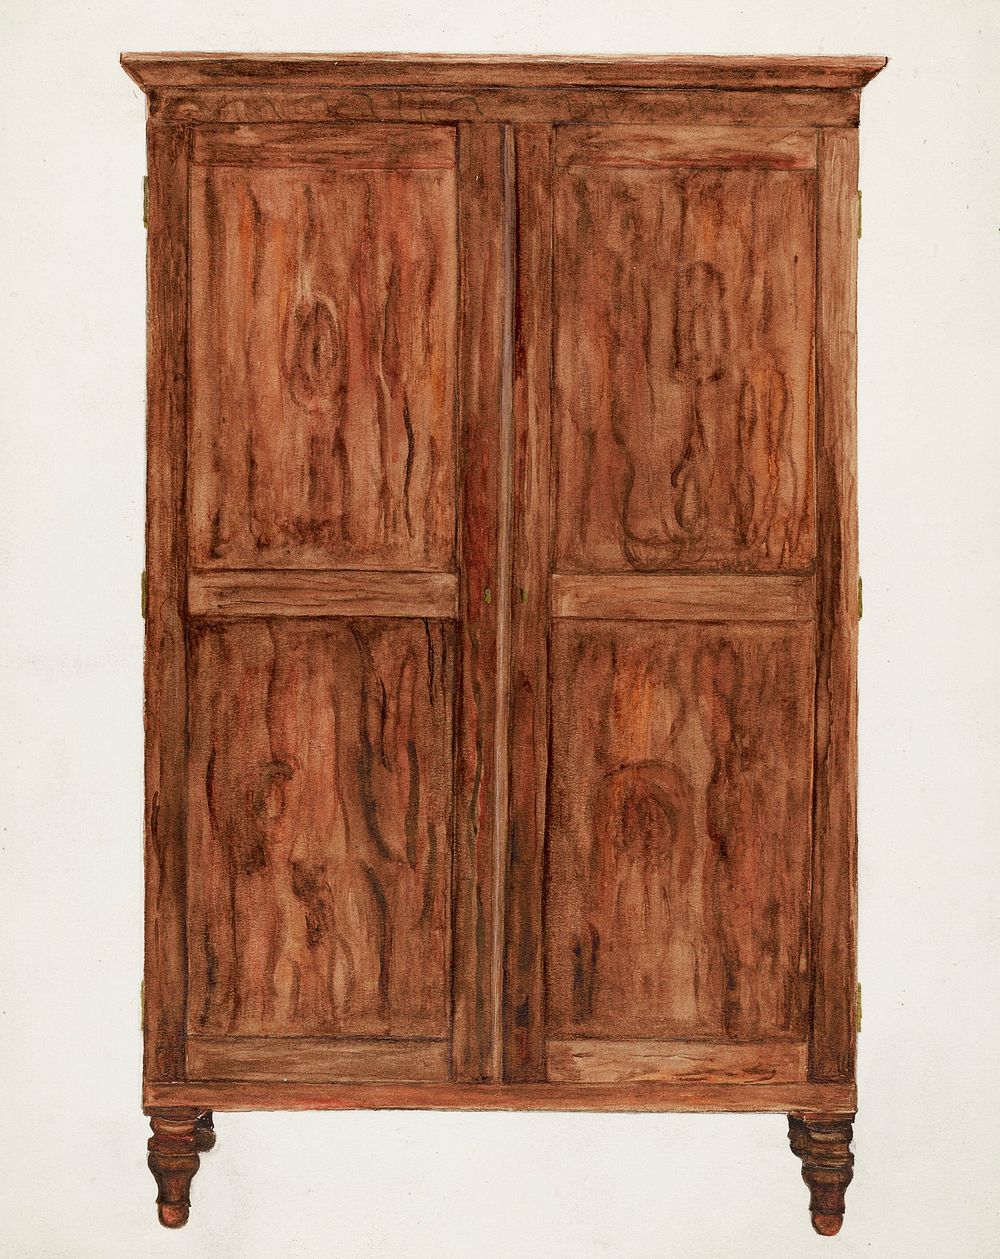 Wardrobe, John Marshall's (c. 1937) by Edna C. Rex. Original from The National Gallery of Art. Digitally enhanced by…